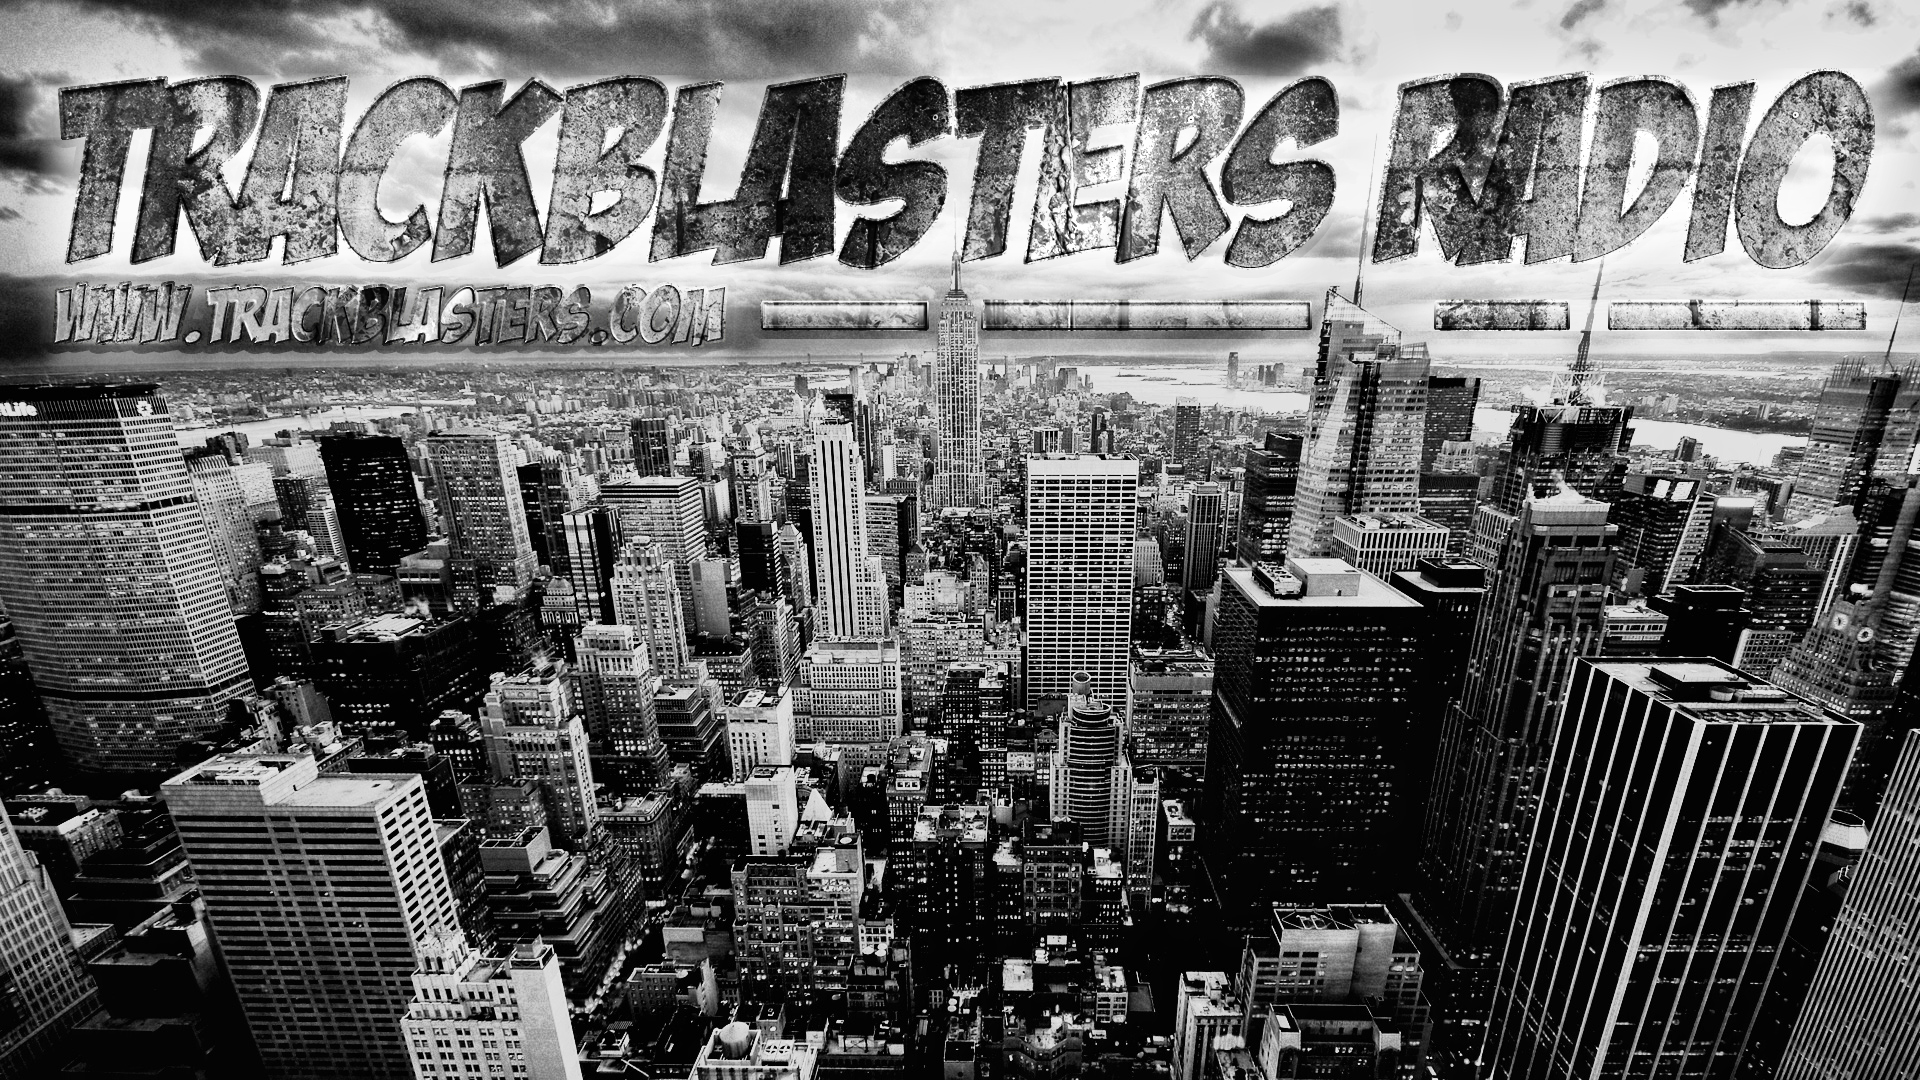 Hd Hip Hop Backgrounds Pixelstalk
underground Hip Hop - New York City - HD Wallpaper 